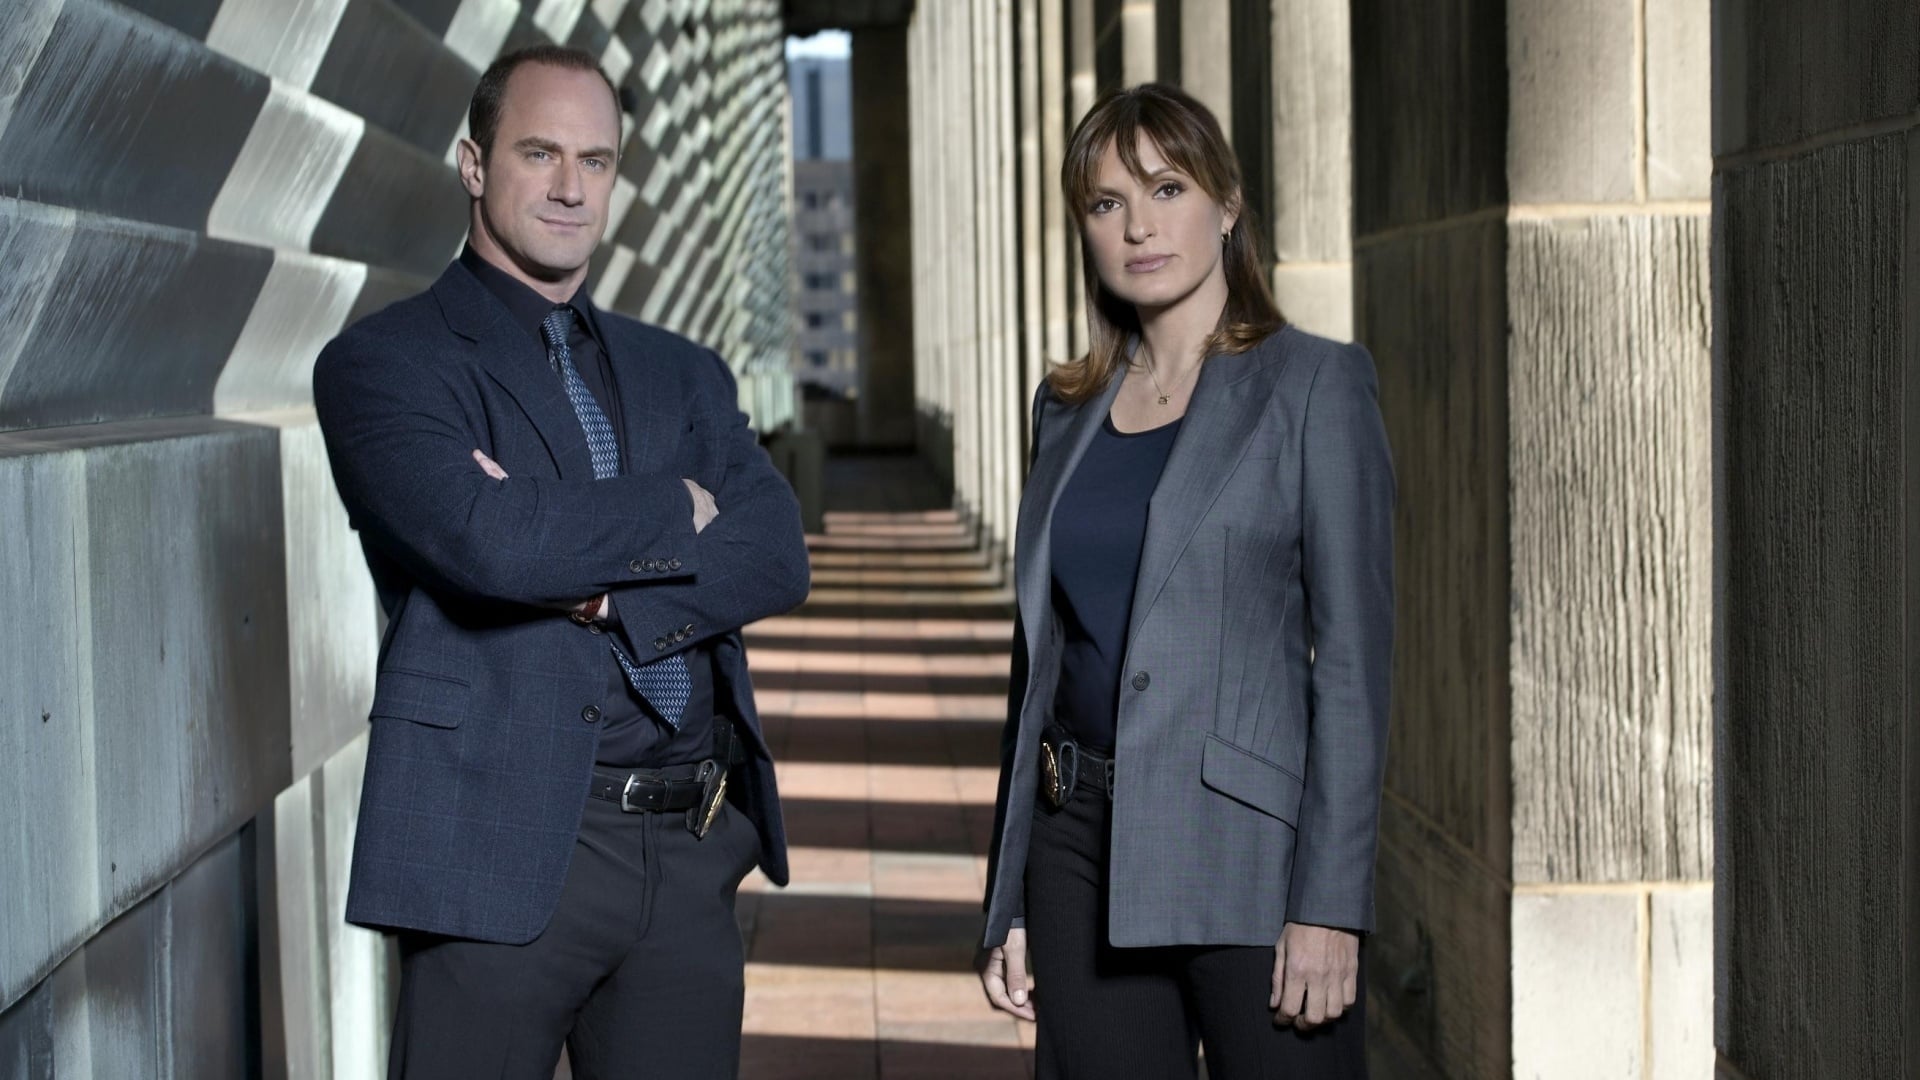 Law & Order: Special Victims Unit - Season 10